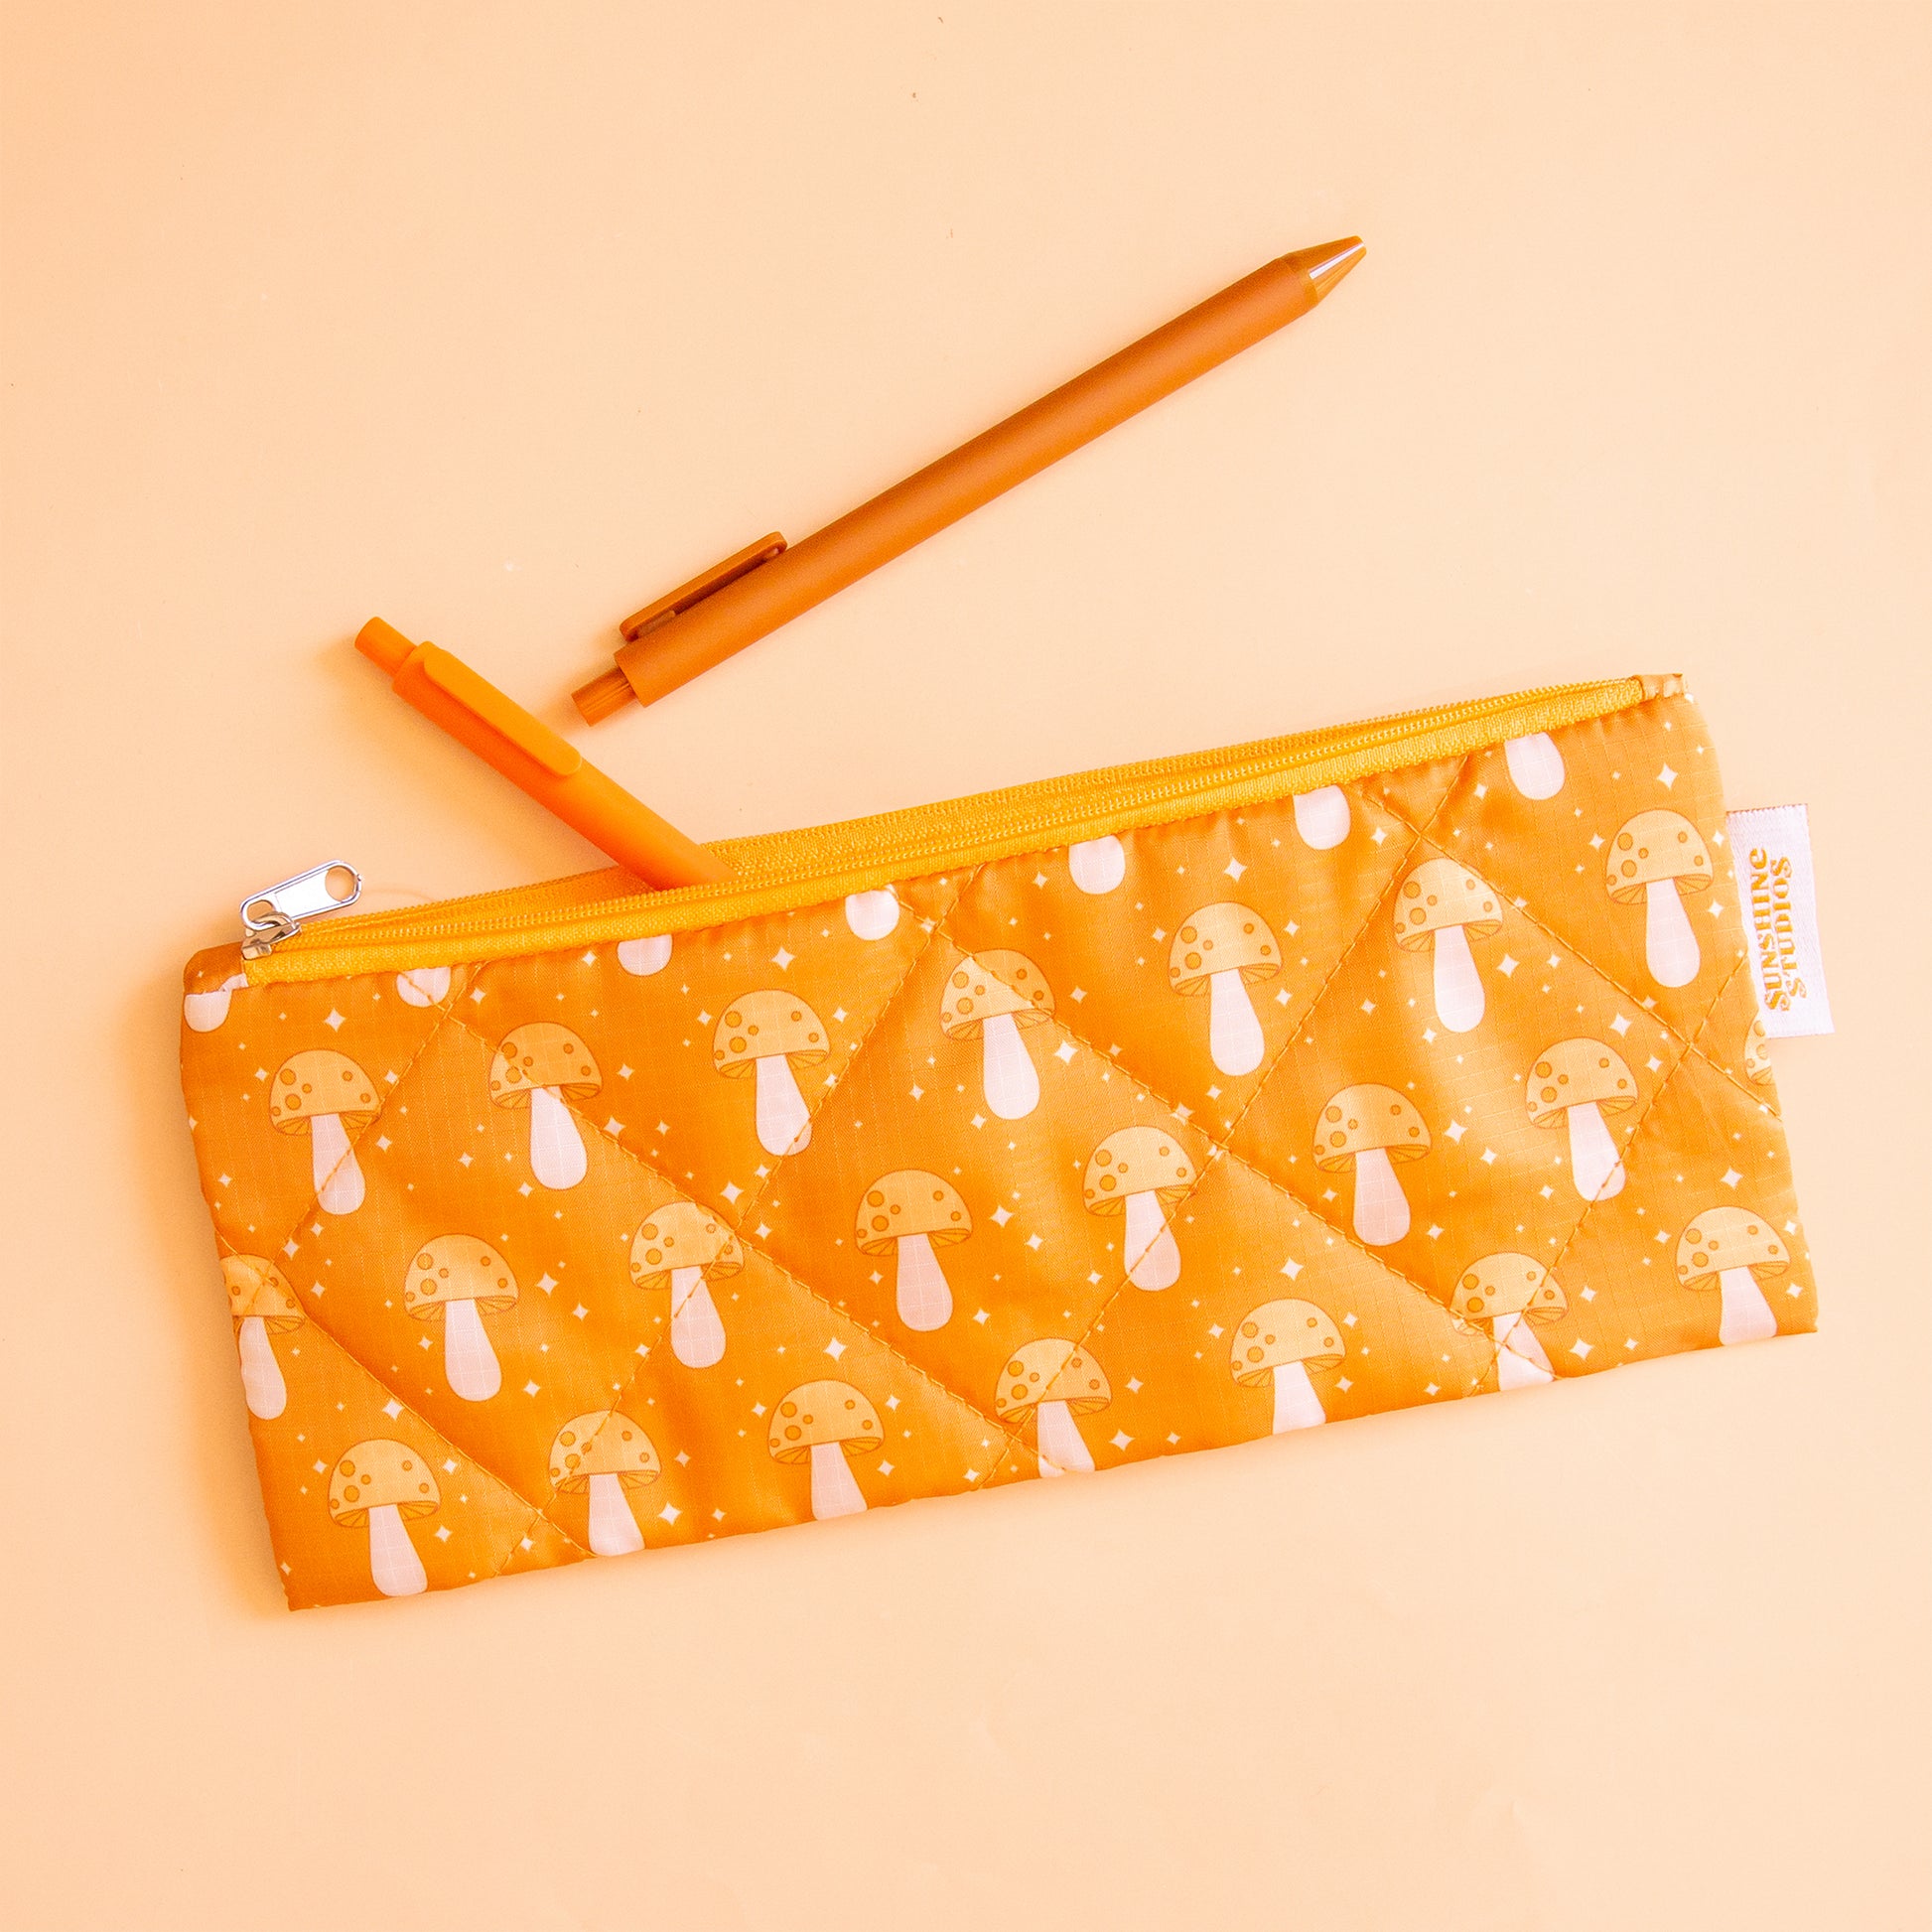 An orange pencil pouch with a mushroom print. 